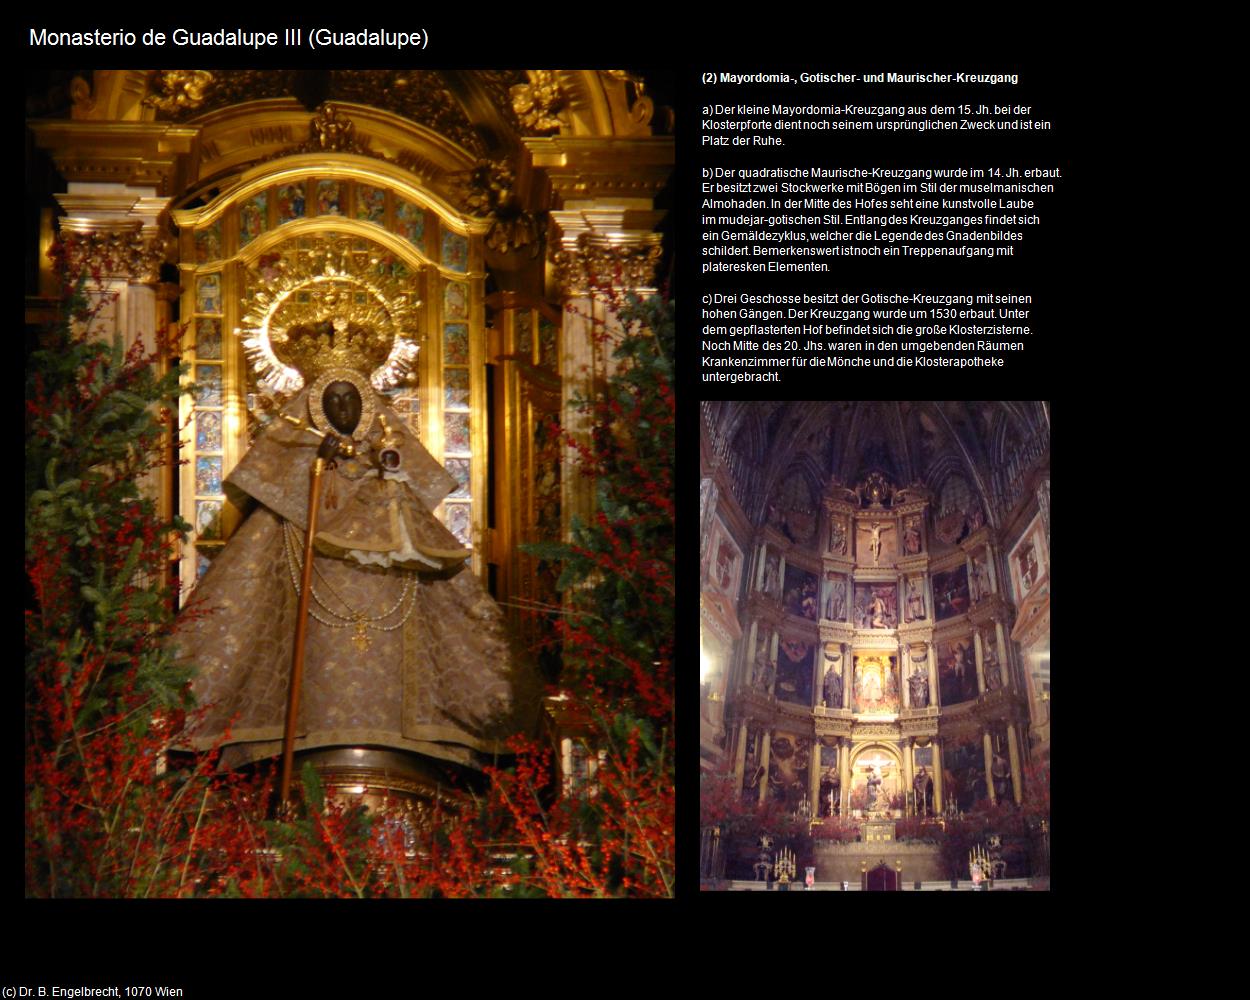 Monasterio III (Guadalupe) in EXTREMADURA